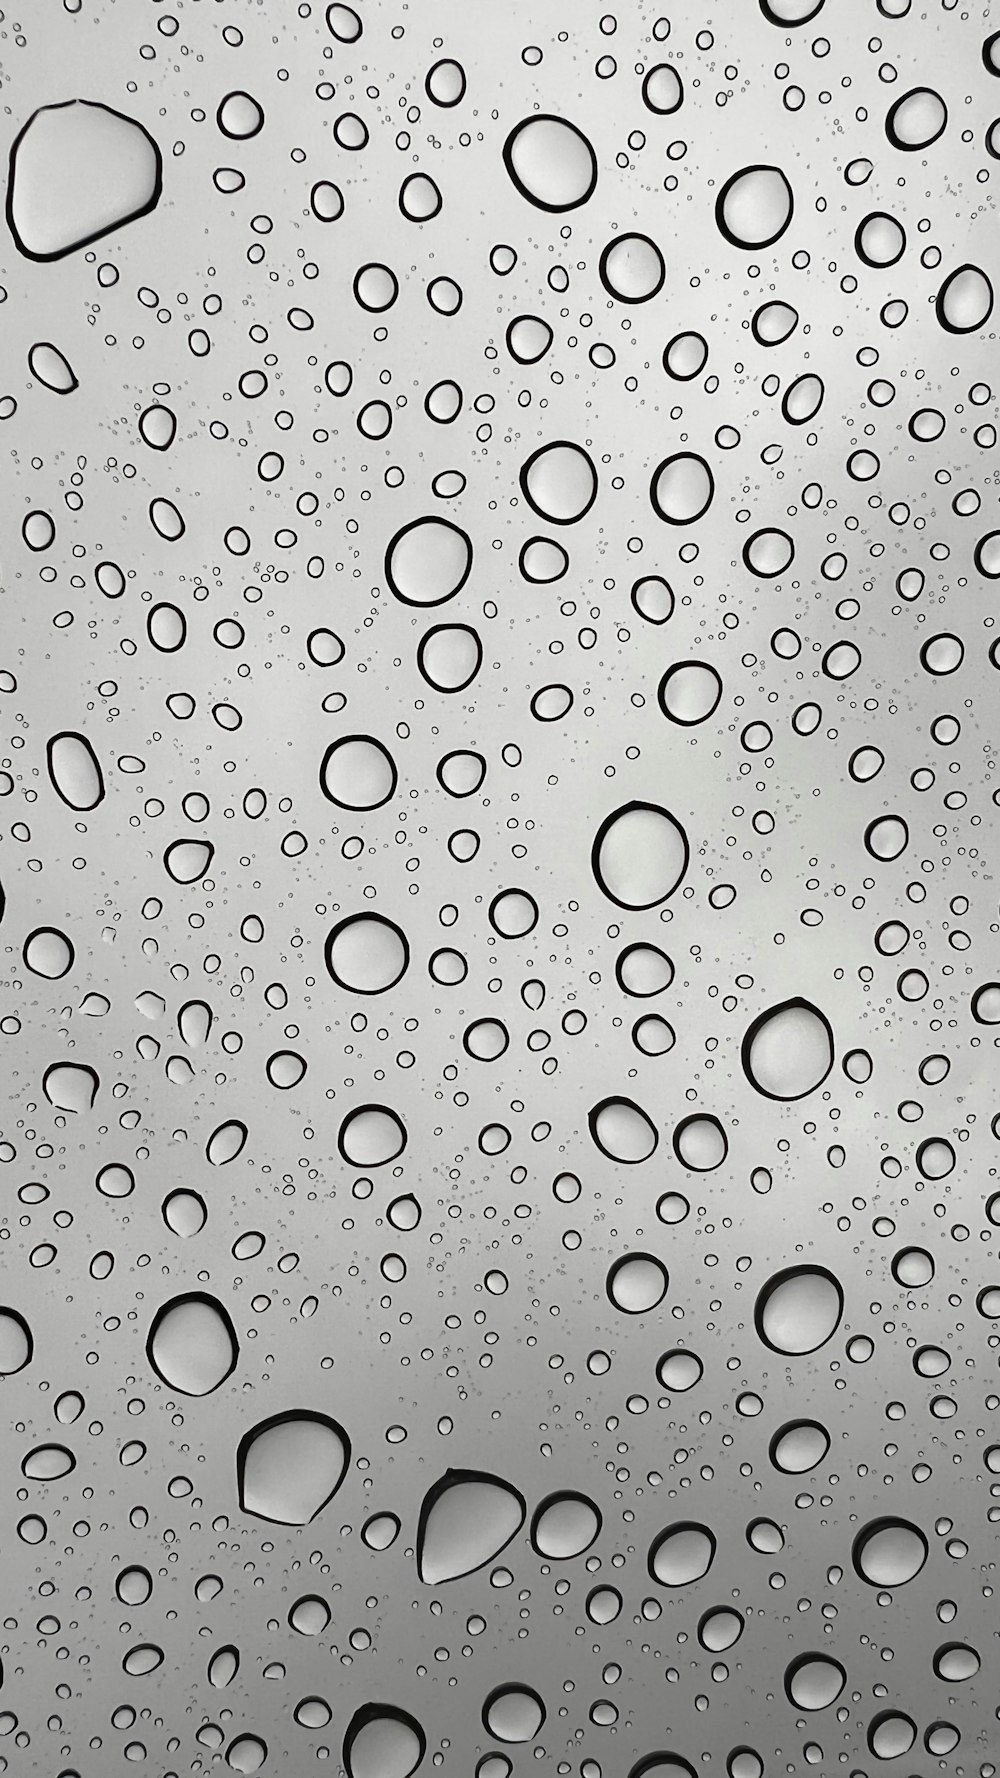 rain drops on the glass of a window